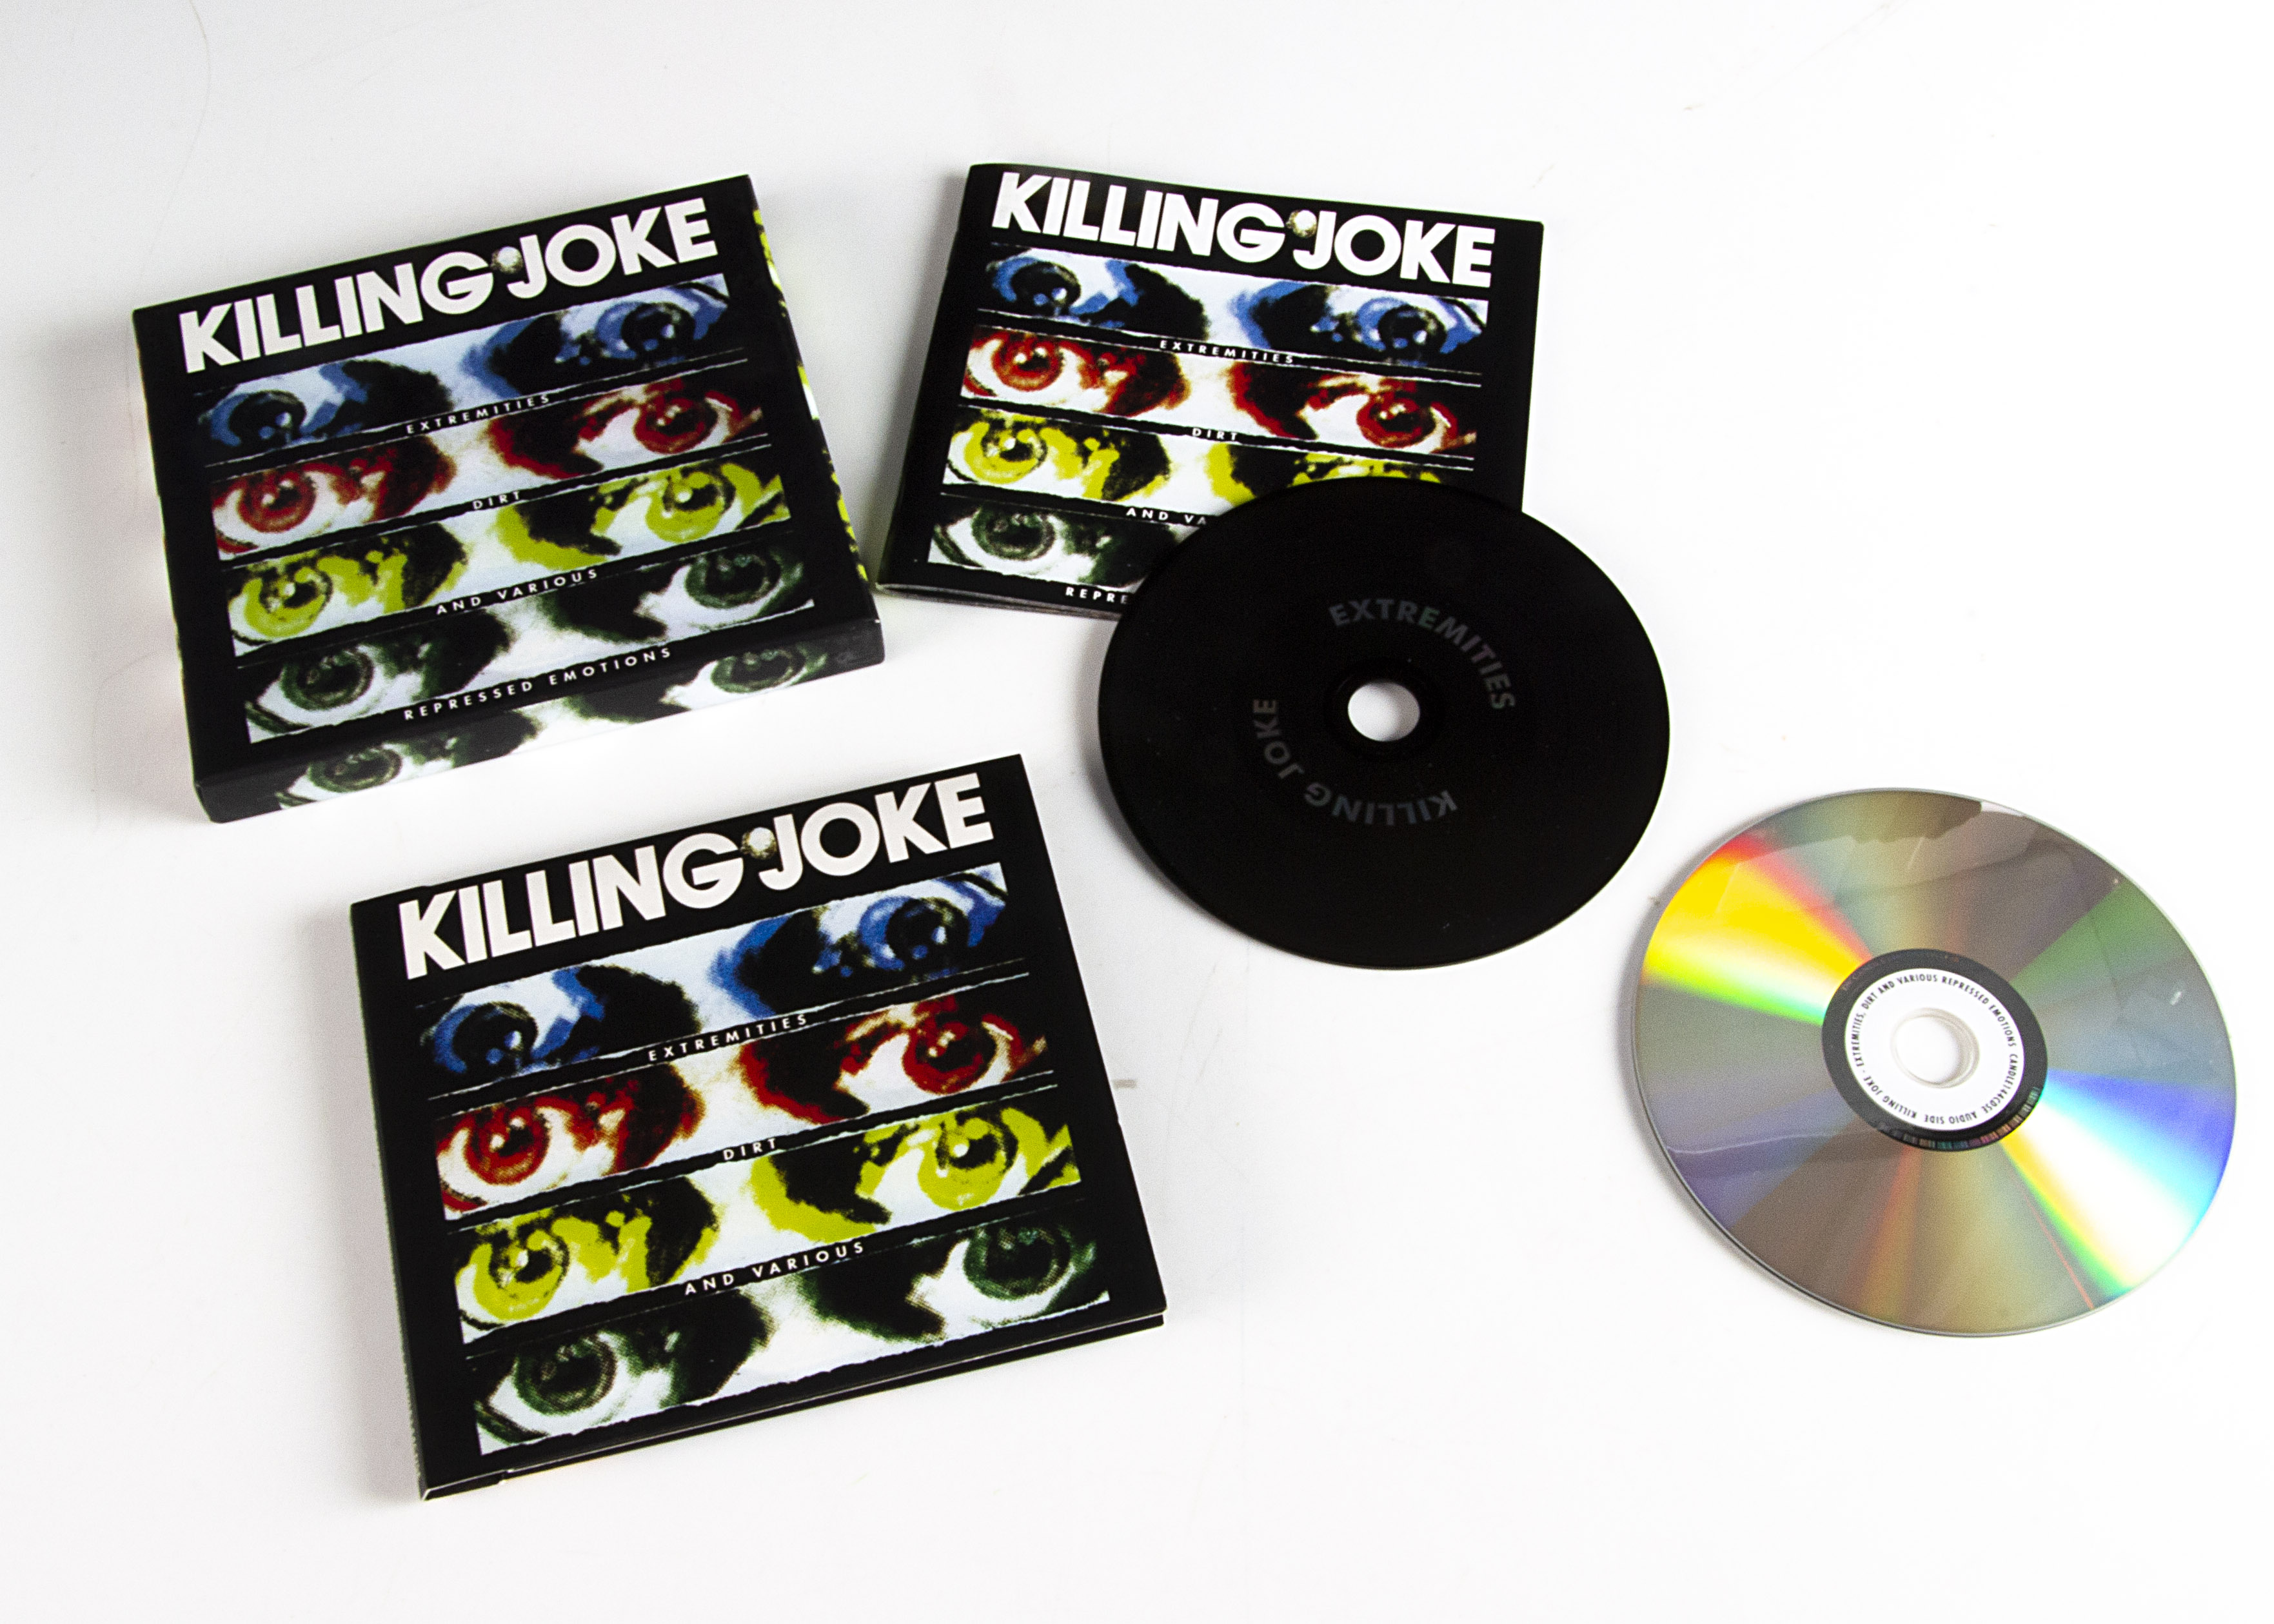 Killing Joke CD Box Set, Extremities - 2 Disc Box set including Audio Disc and Audio / DVD Hybrid